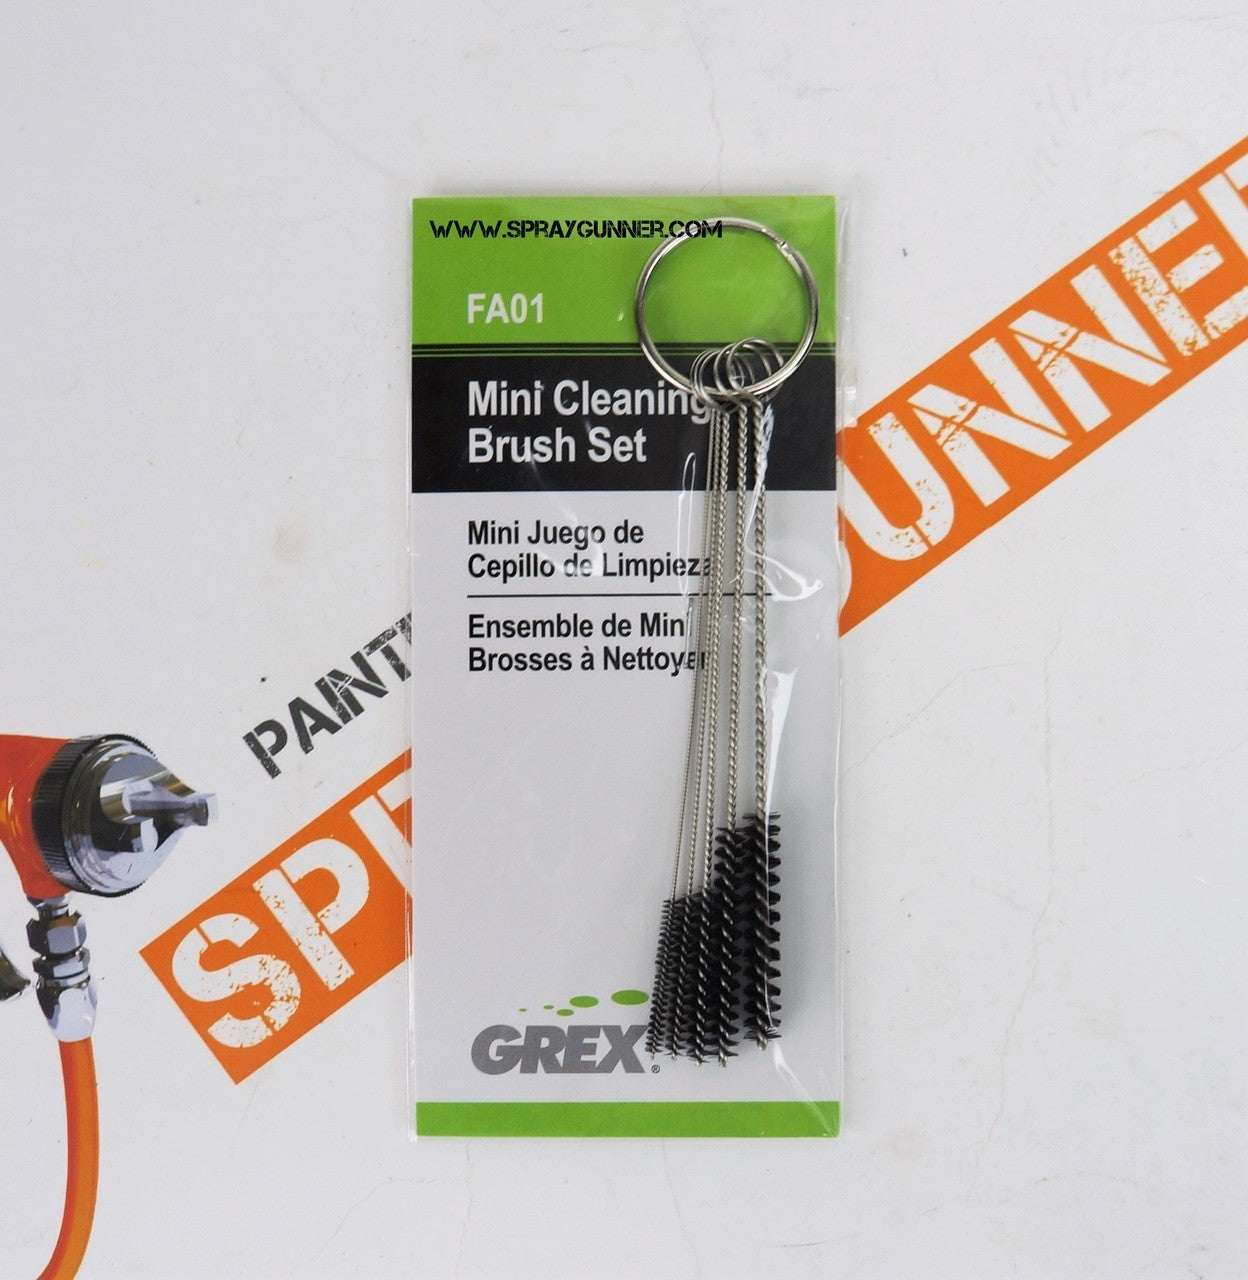 Grex Mini Cleaning Brush Set FA01 Grex Airbrush